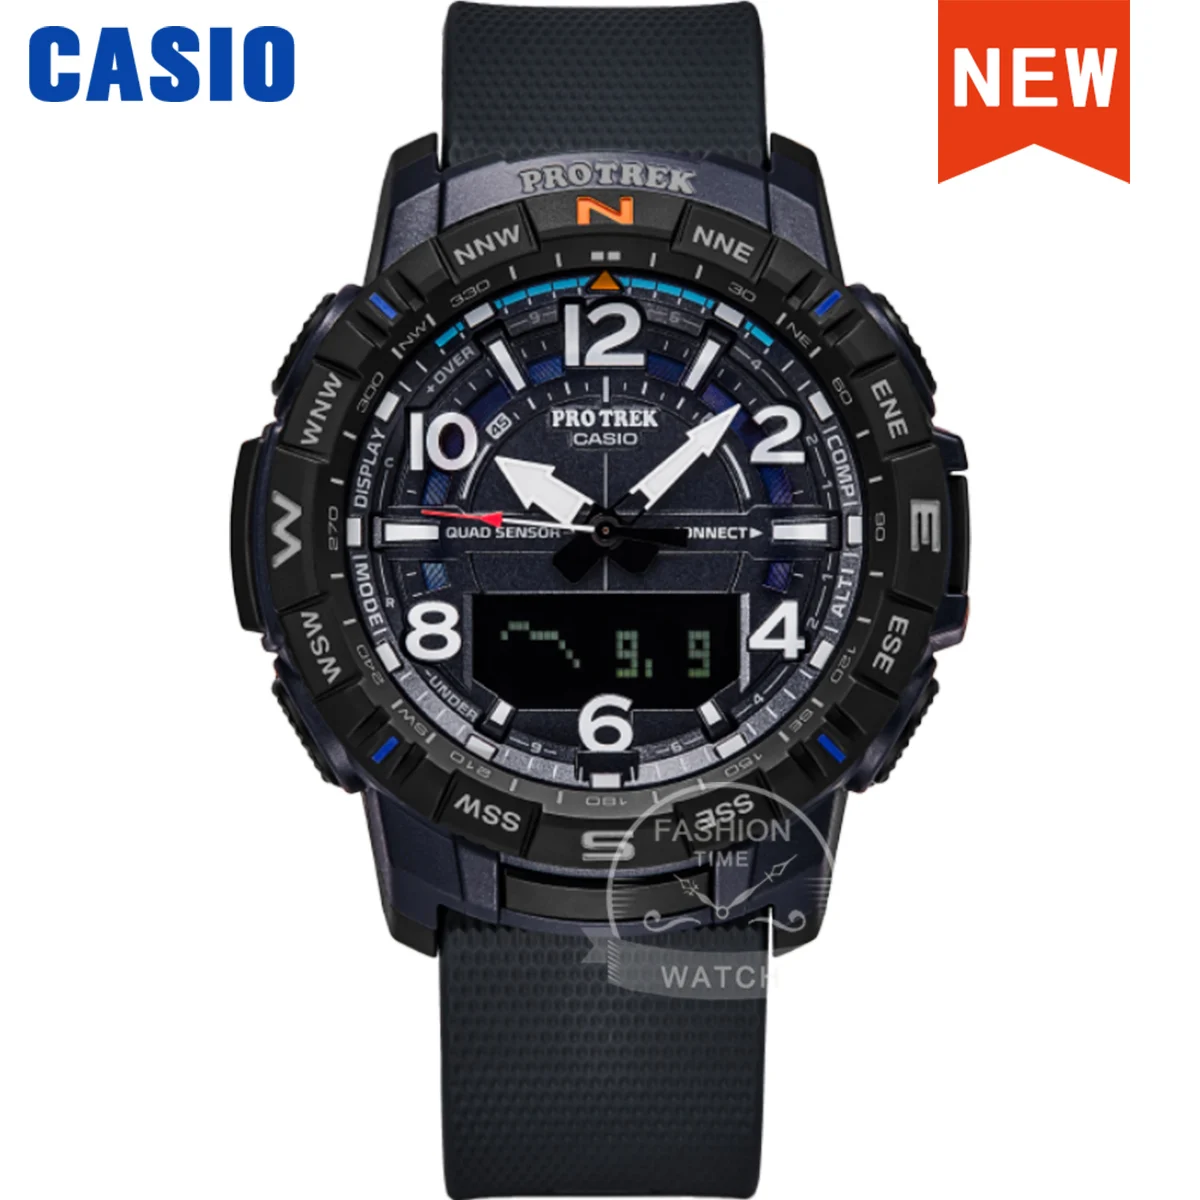 Casio watch for men PROTREK mountain-climbing military top luxury